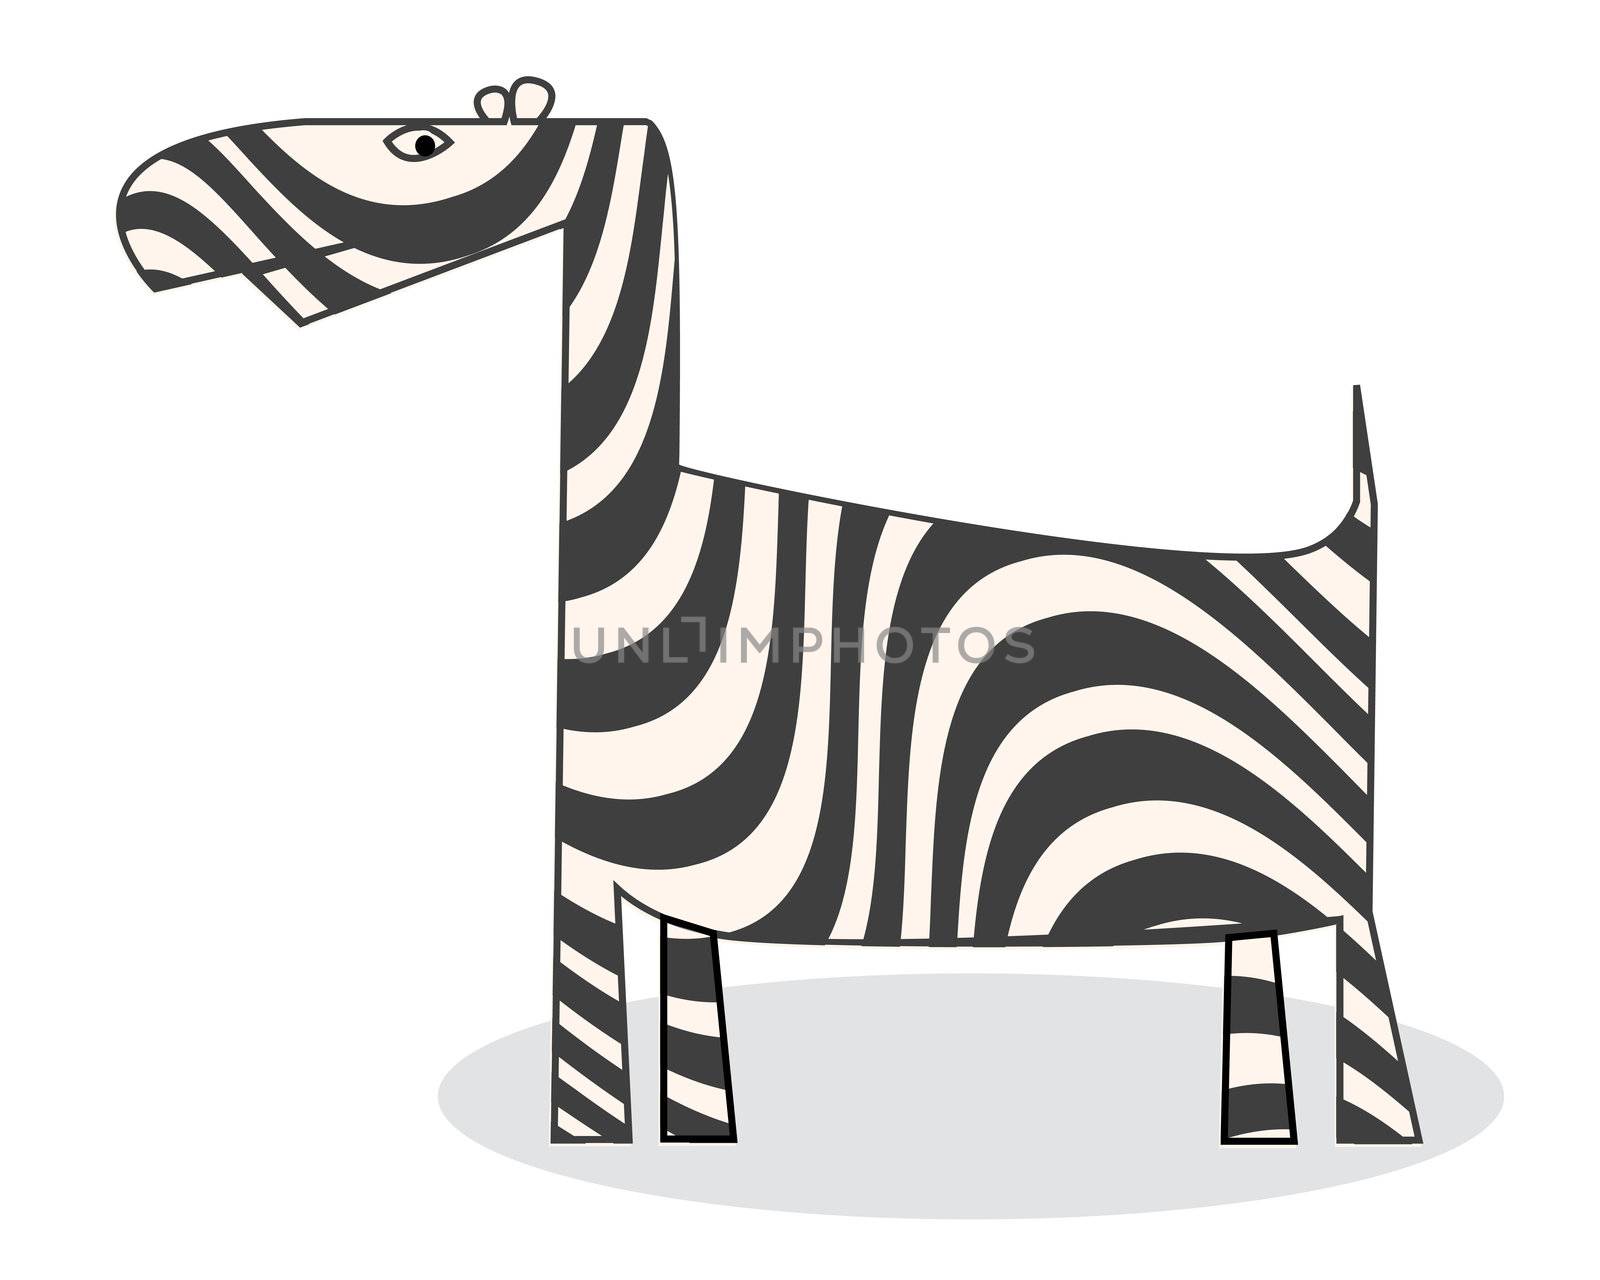 Clip art zebra by Lirch